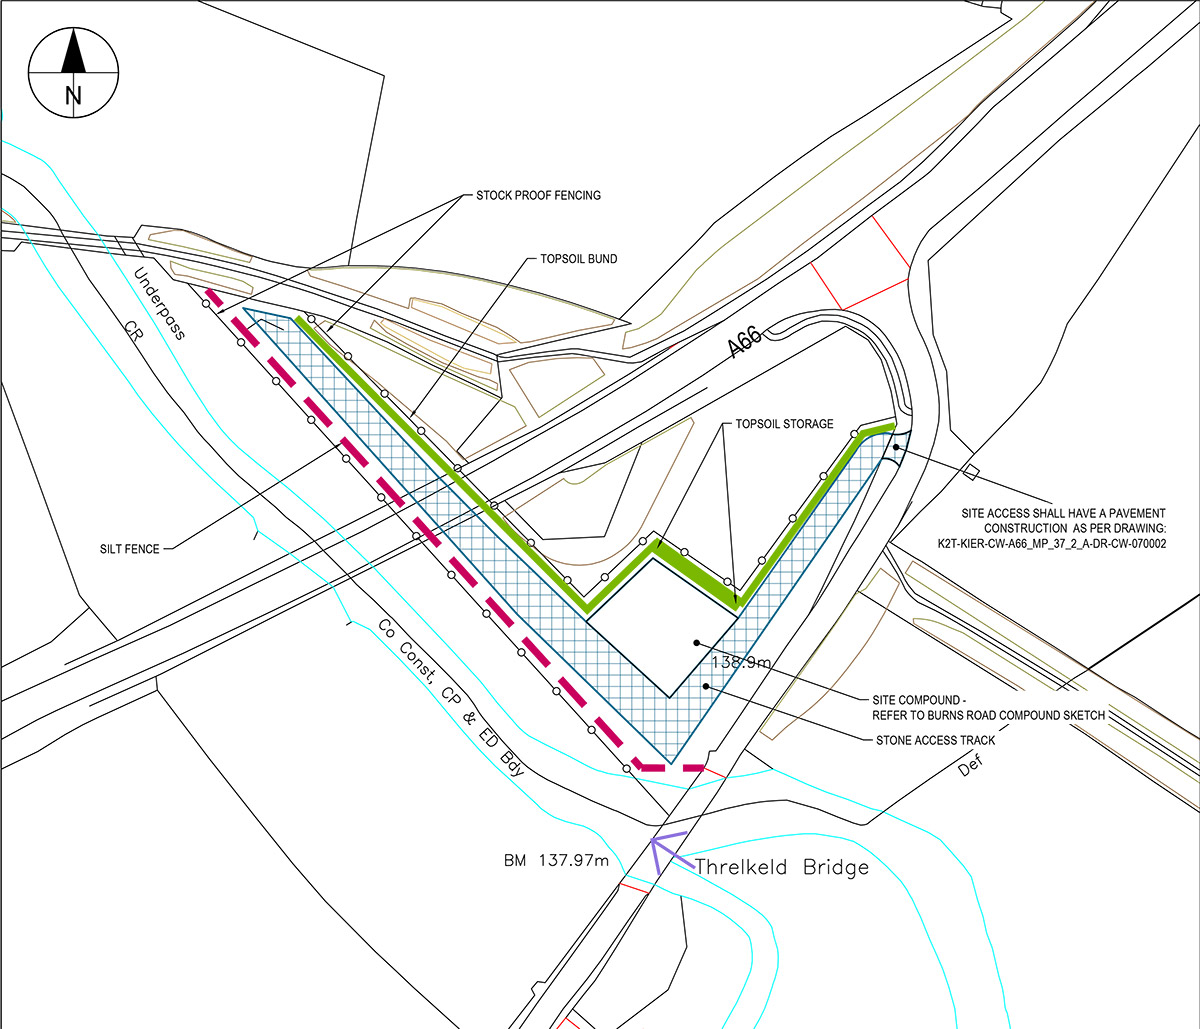 Plan of proposed work at Burns Road